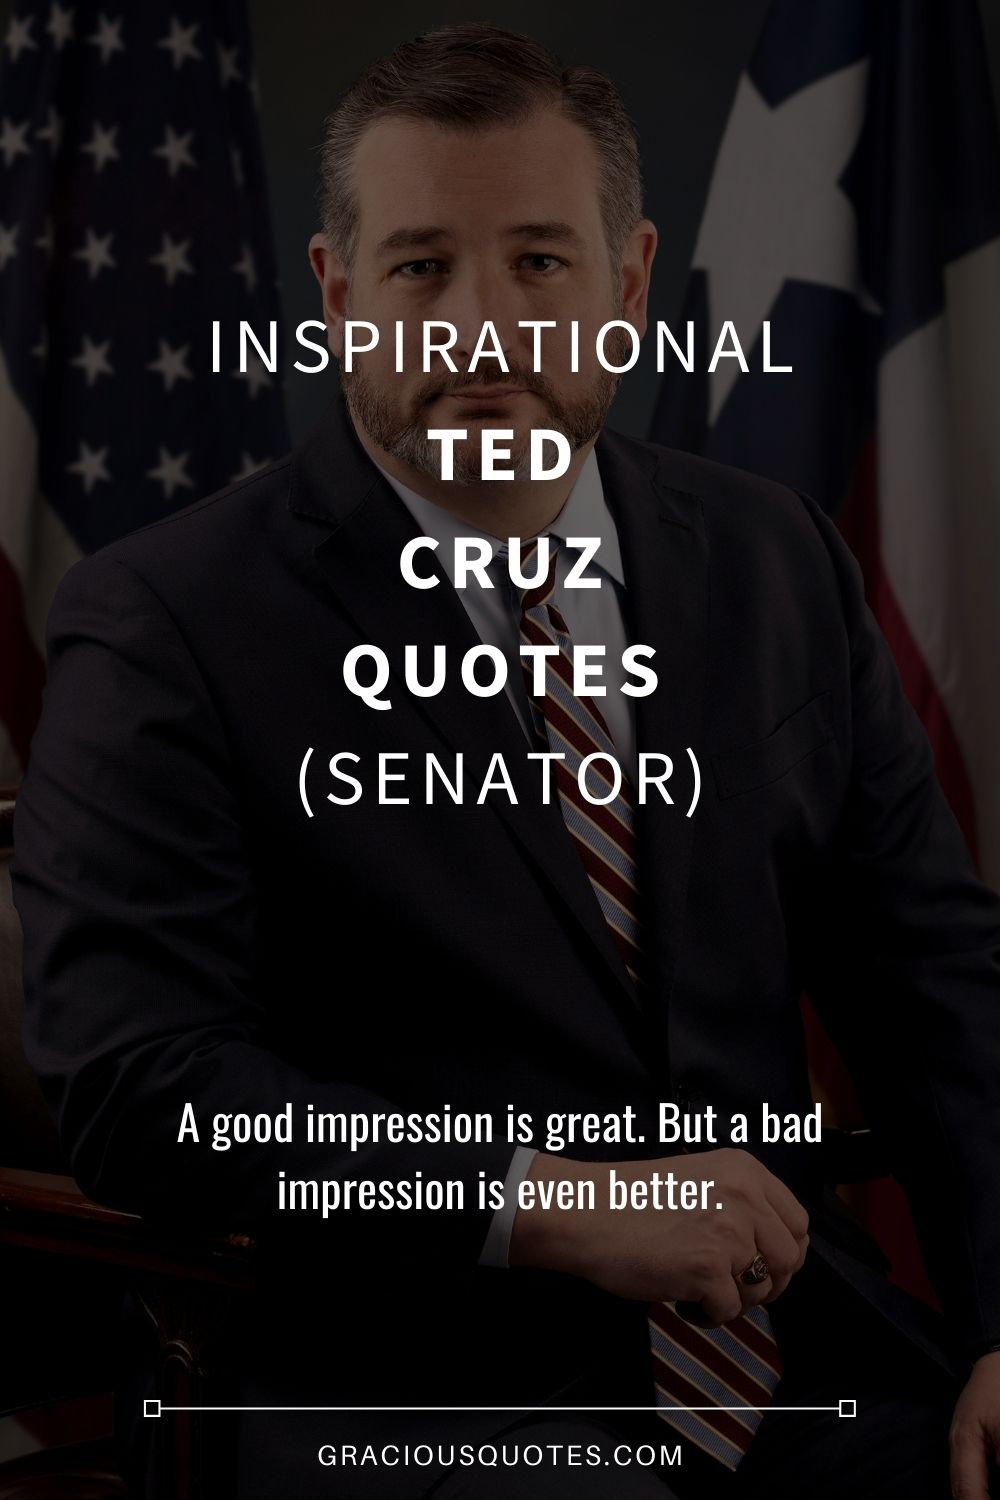 Inspirational Ted Cruz Quotes (SENATOR) - Gracious Quotes